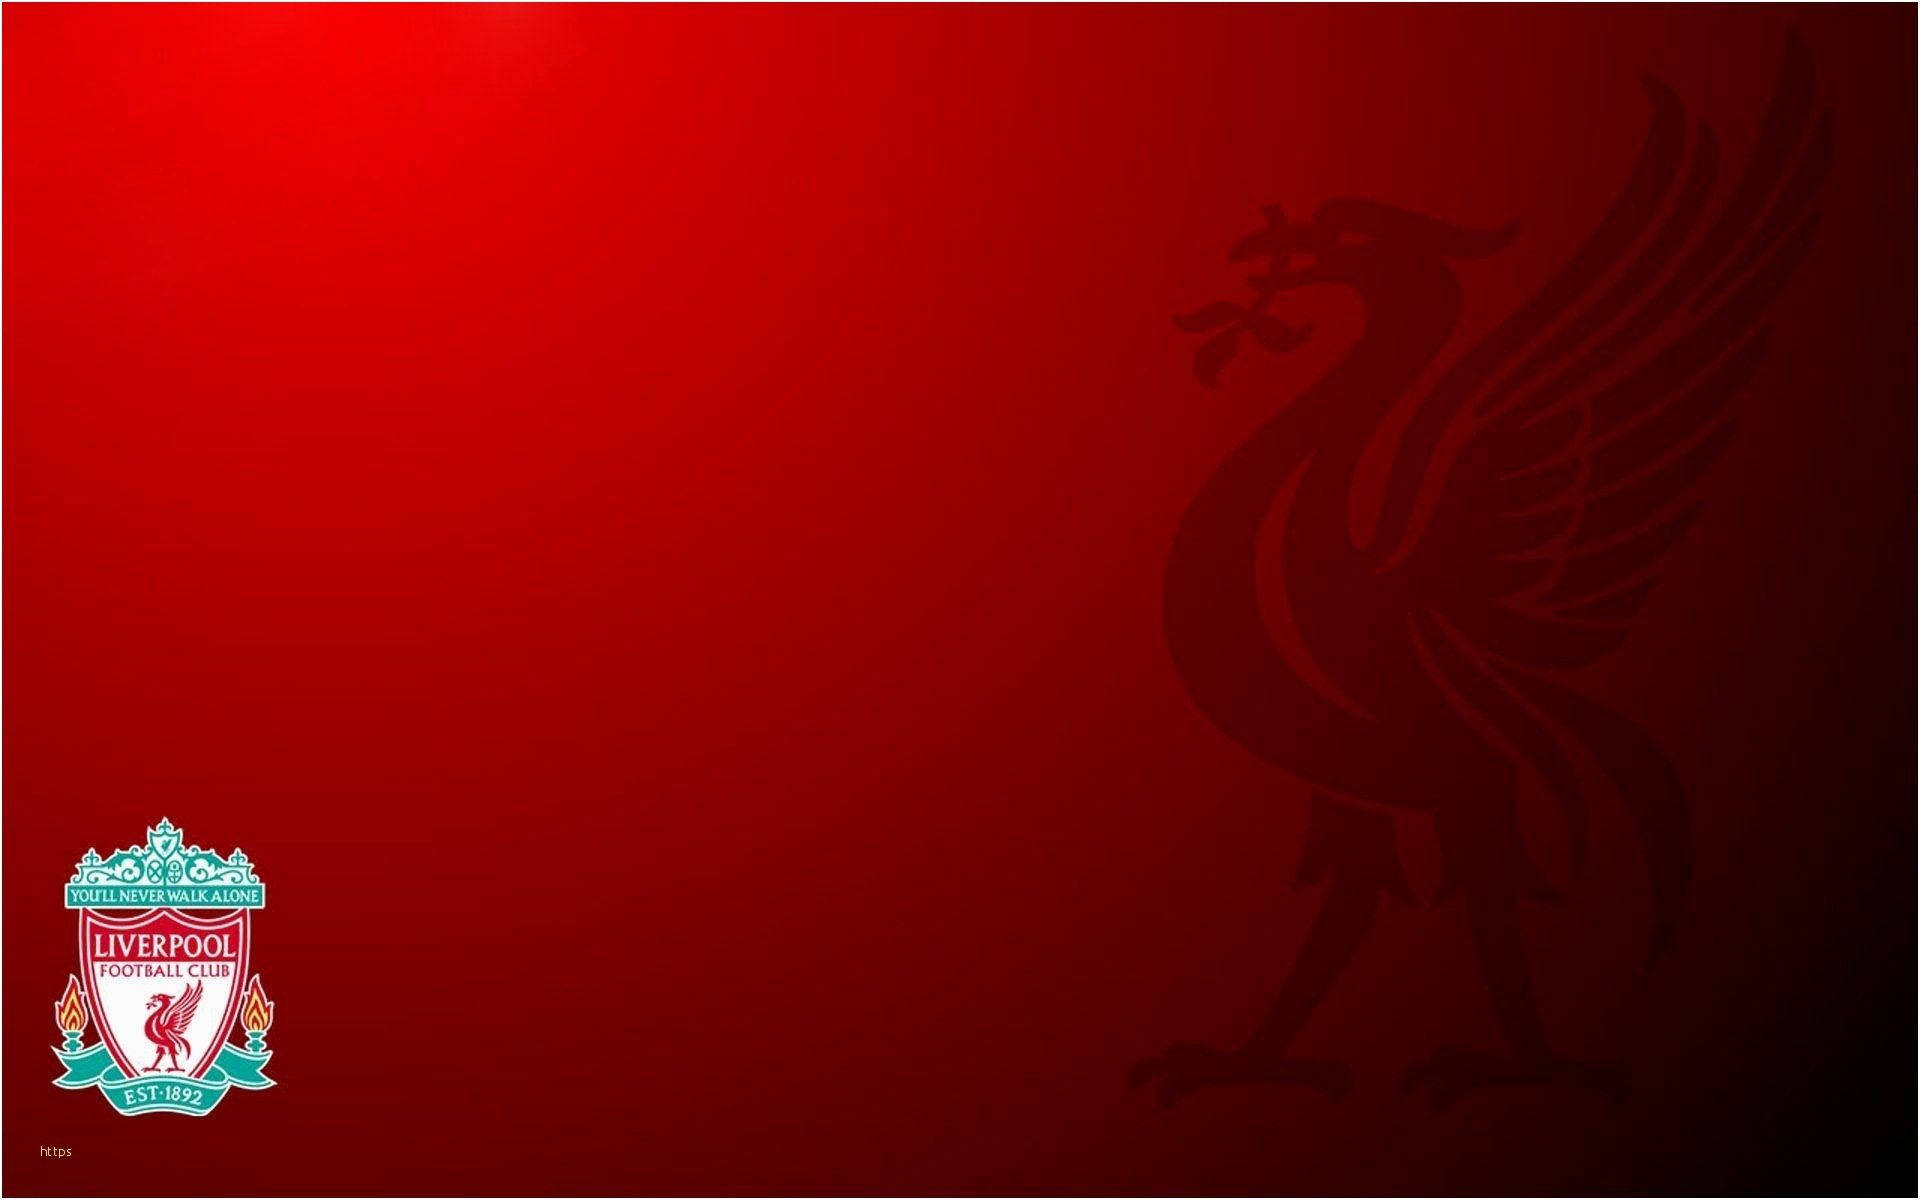 Liverpool Fc Red Liver Bird